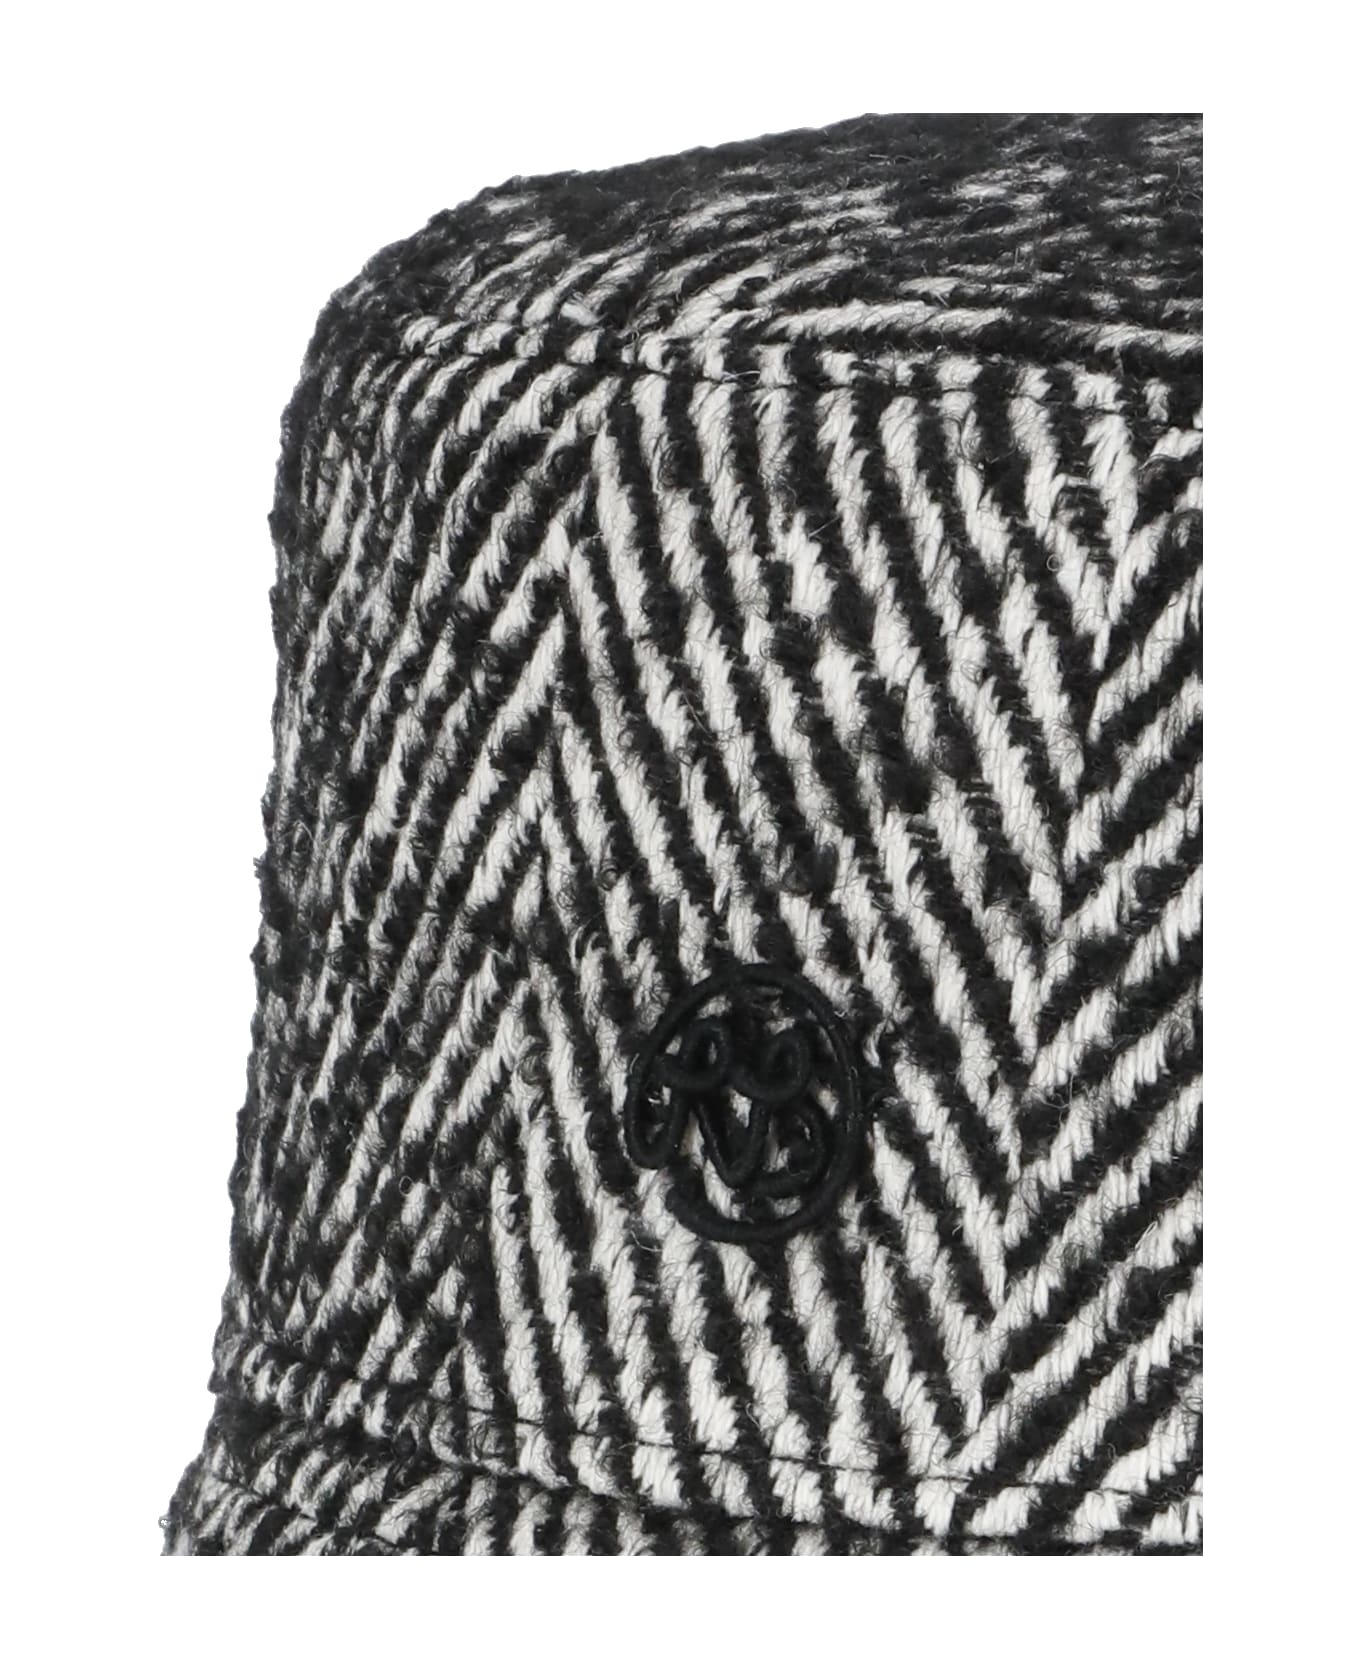 Ruslan Baginskiy Bucket Hat With Embroidery - Black